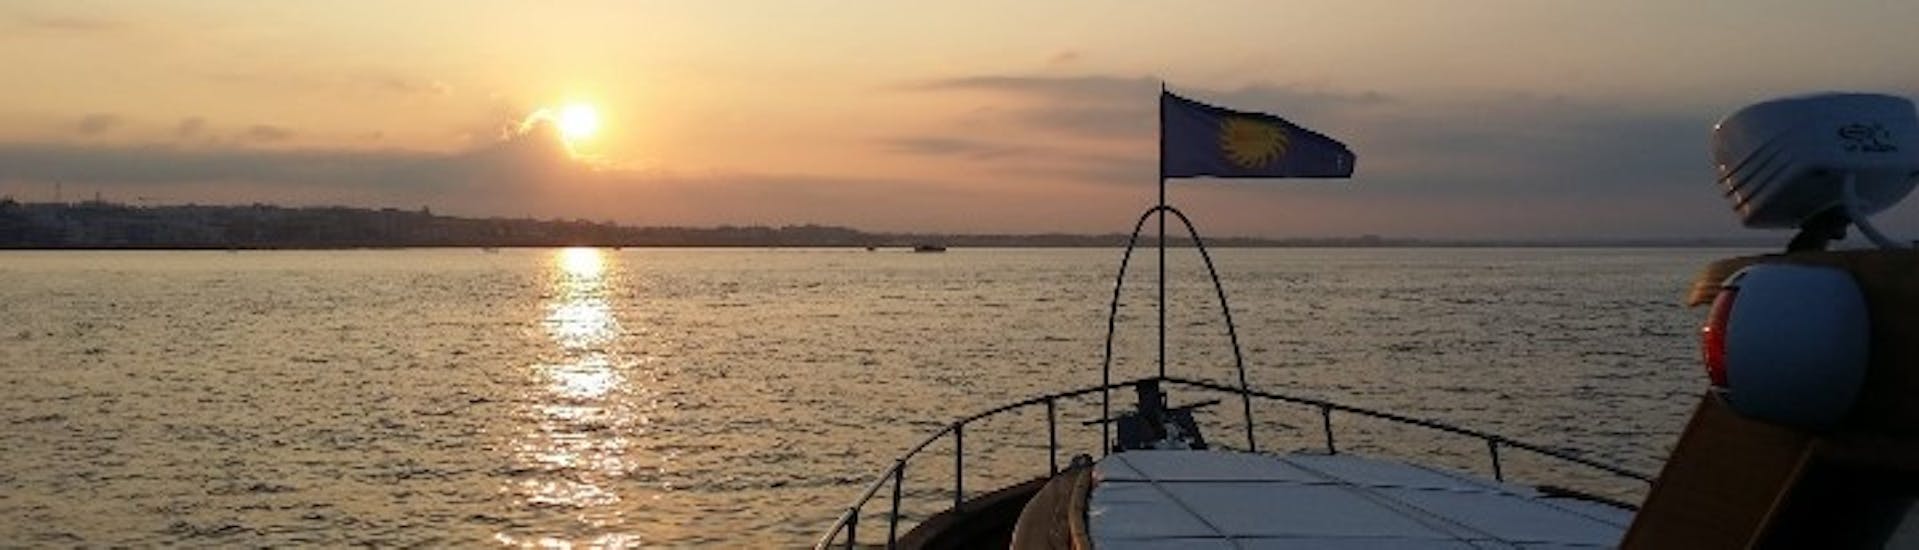 Sunset Boat Trip along Cefalù Coastline with Dinner & Snorkeling.